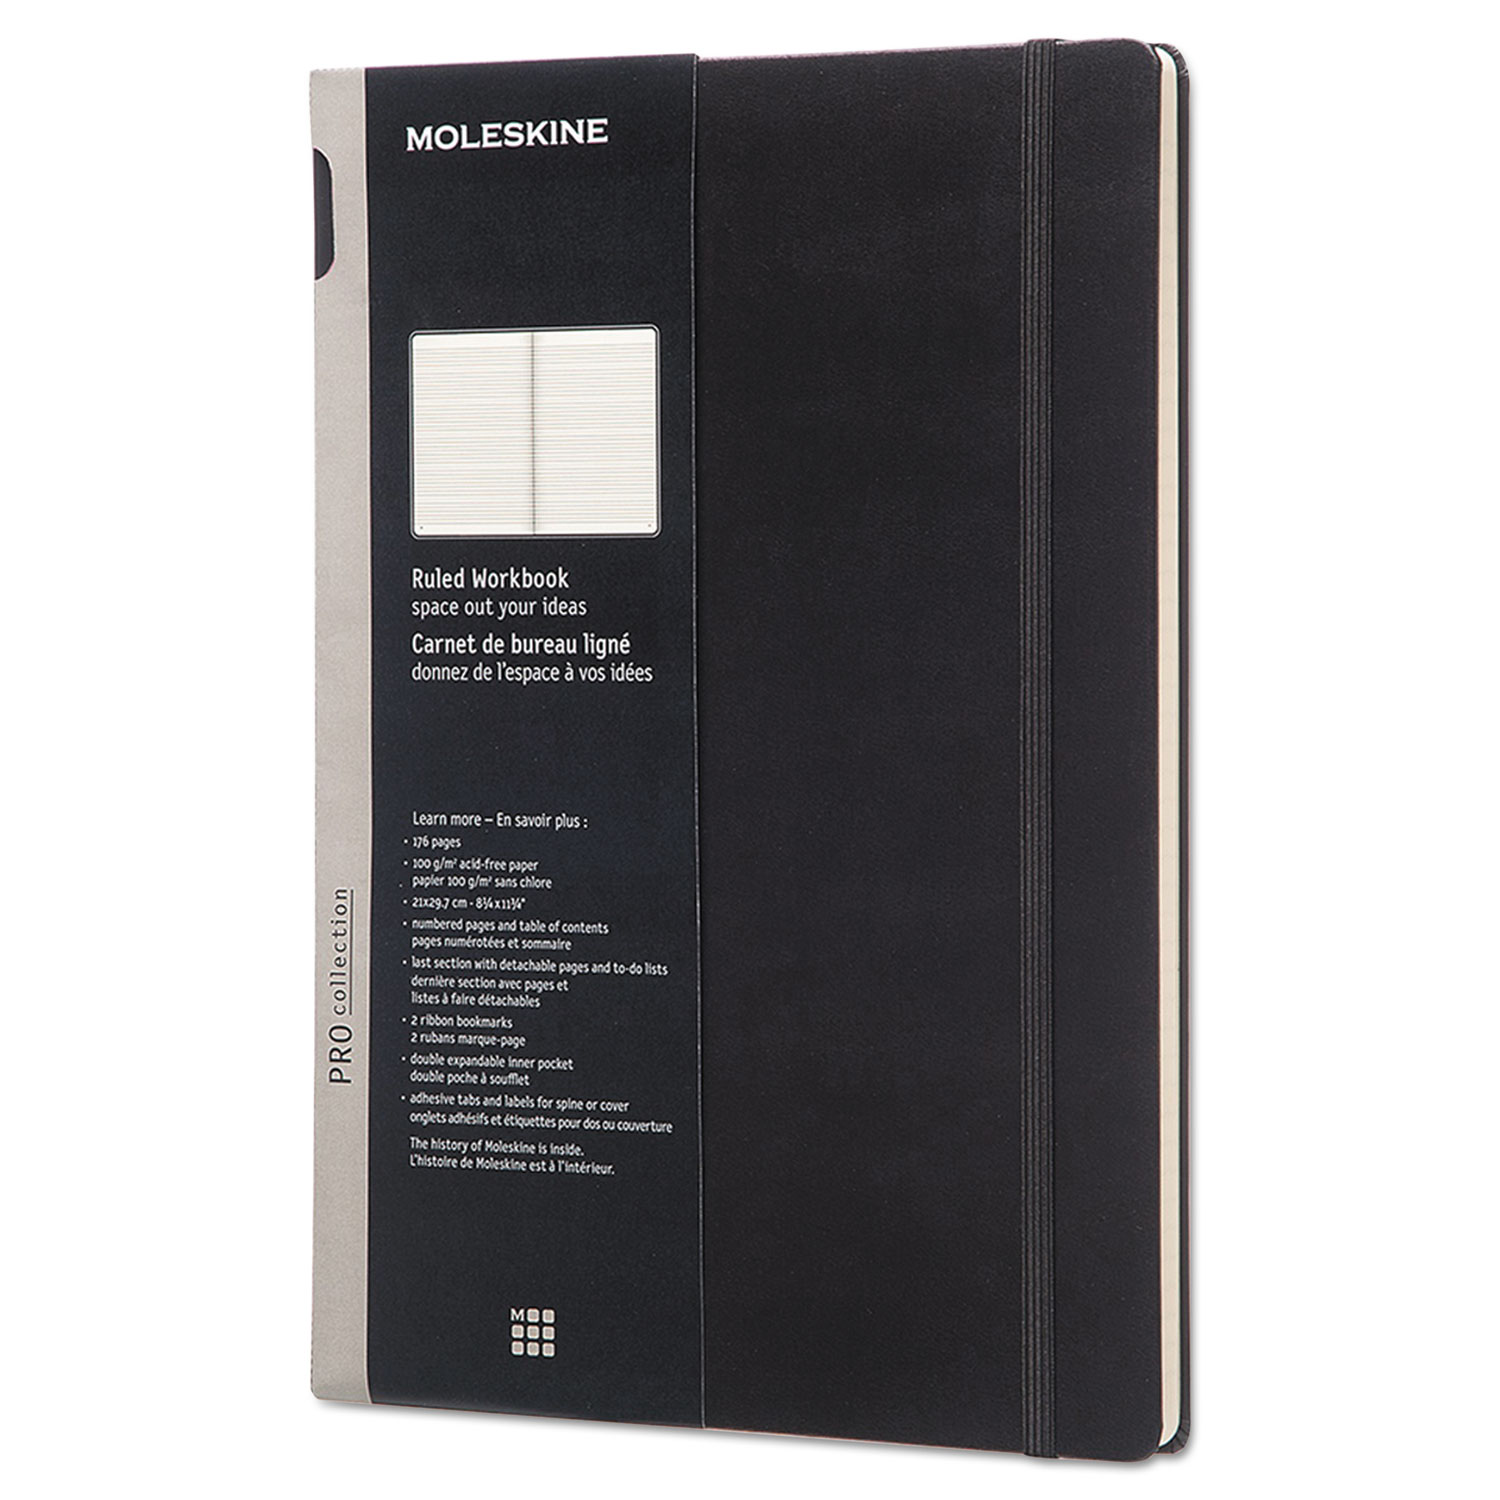  Moleskine PROPFNTB7HBK Professional Notebook, Medium/College Rule, Black Cover, 11 x 8.5, 176 Sheets (HBGPROPFNTB7HBK) 